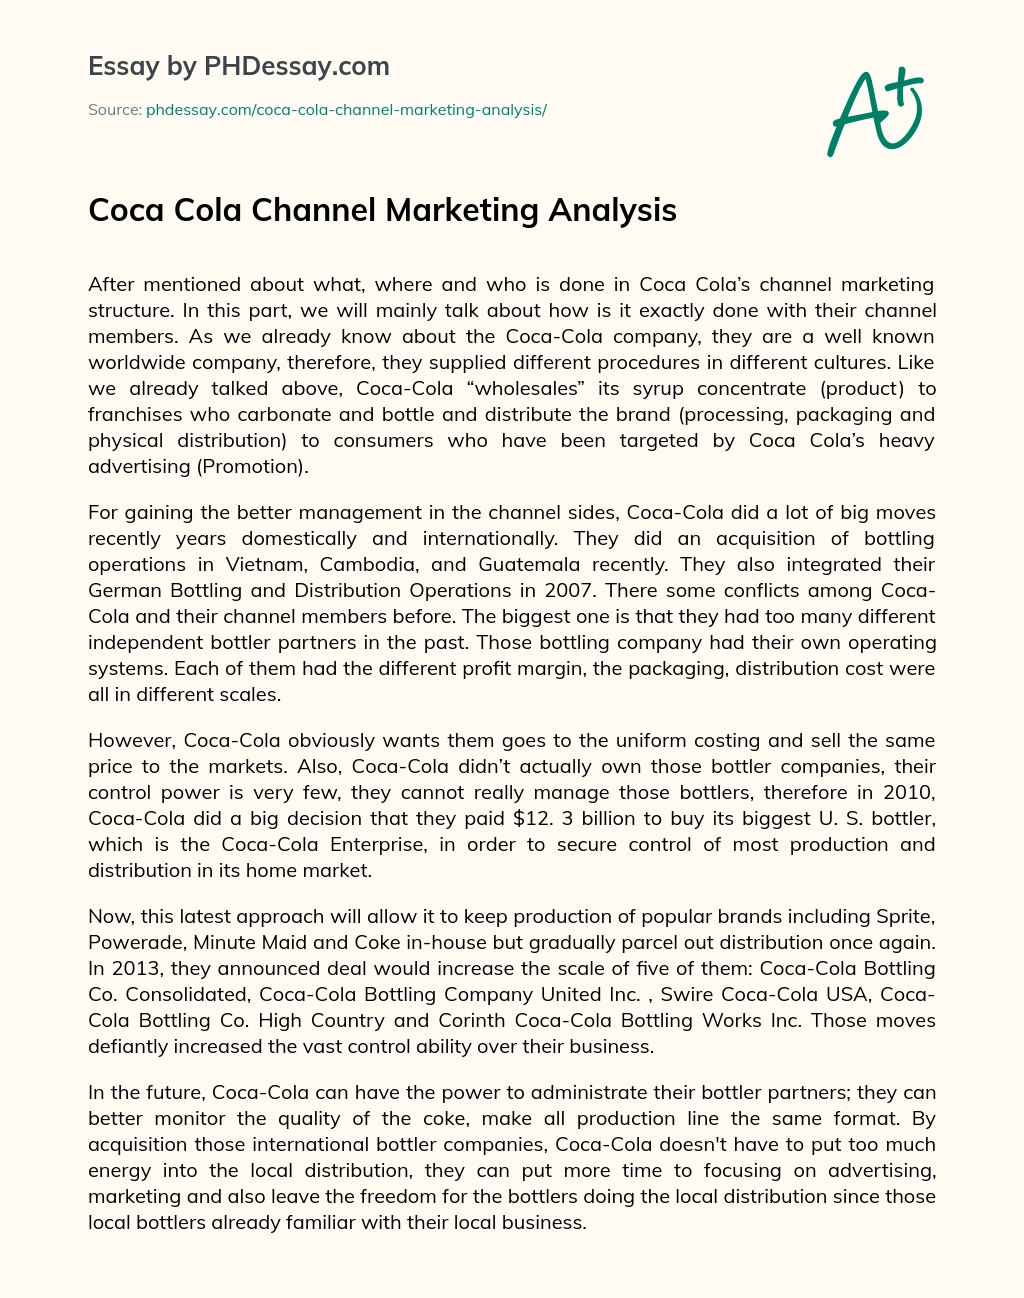 Coca Cola Channel Marketing Analysis essay